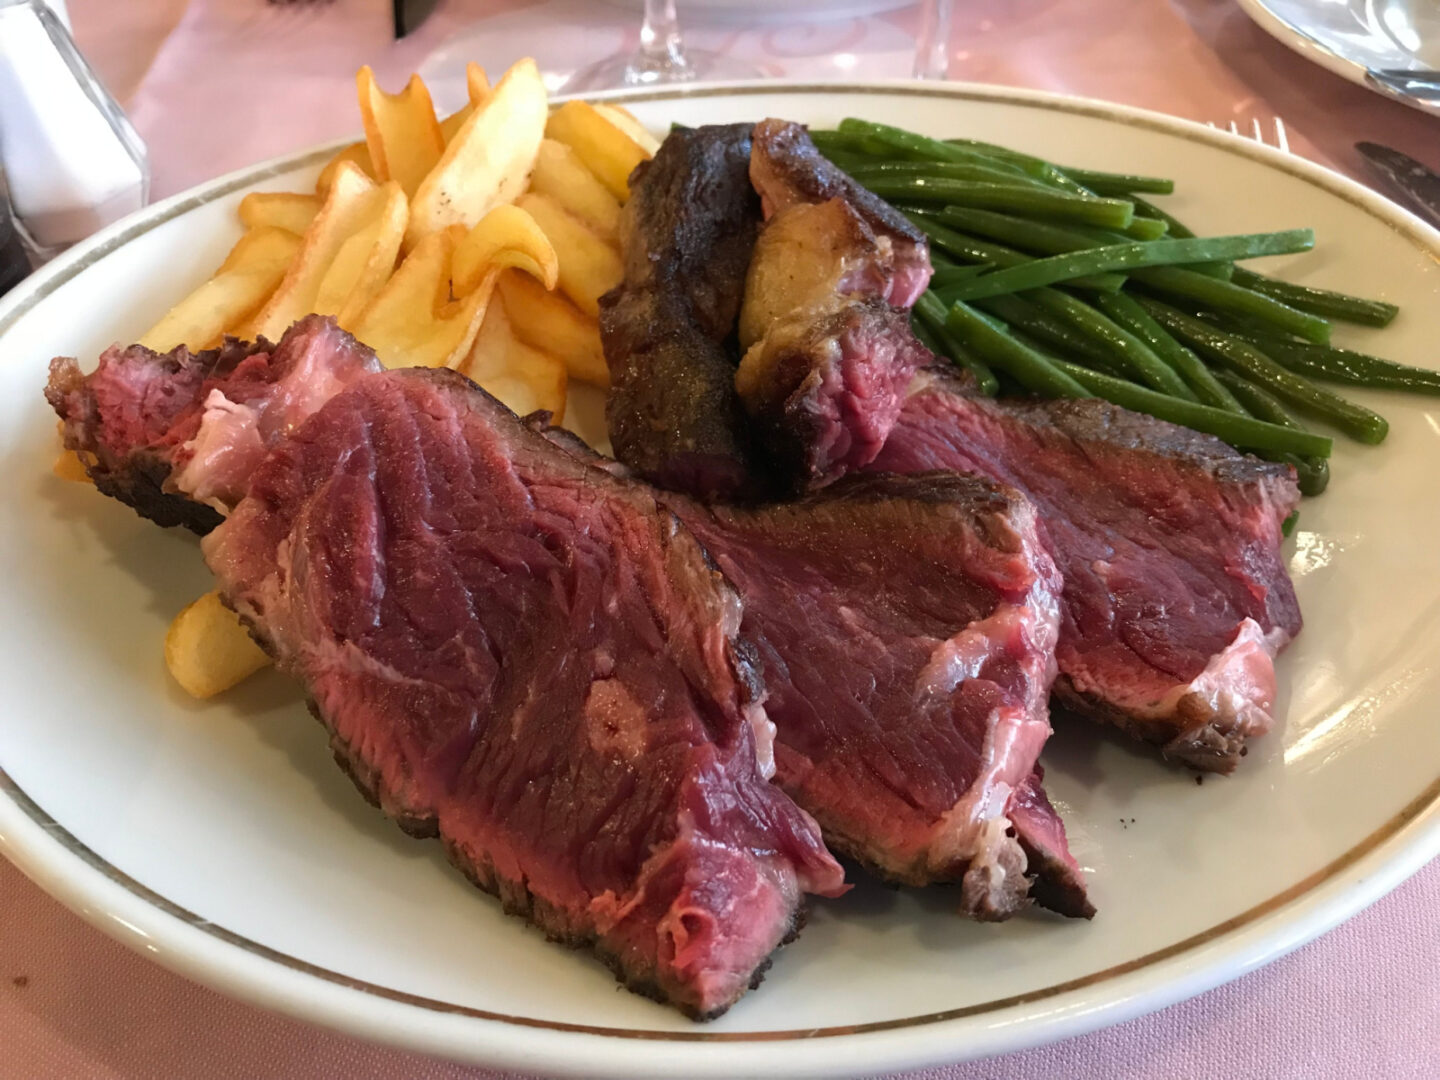 blue rare steak with veggies